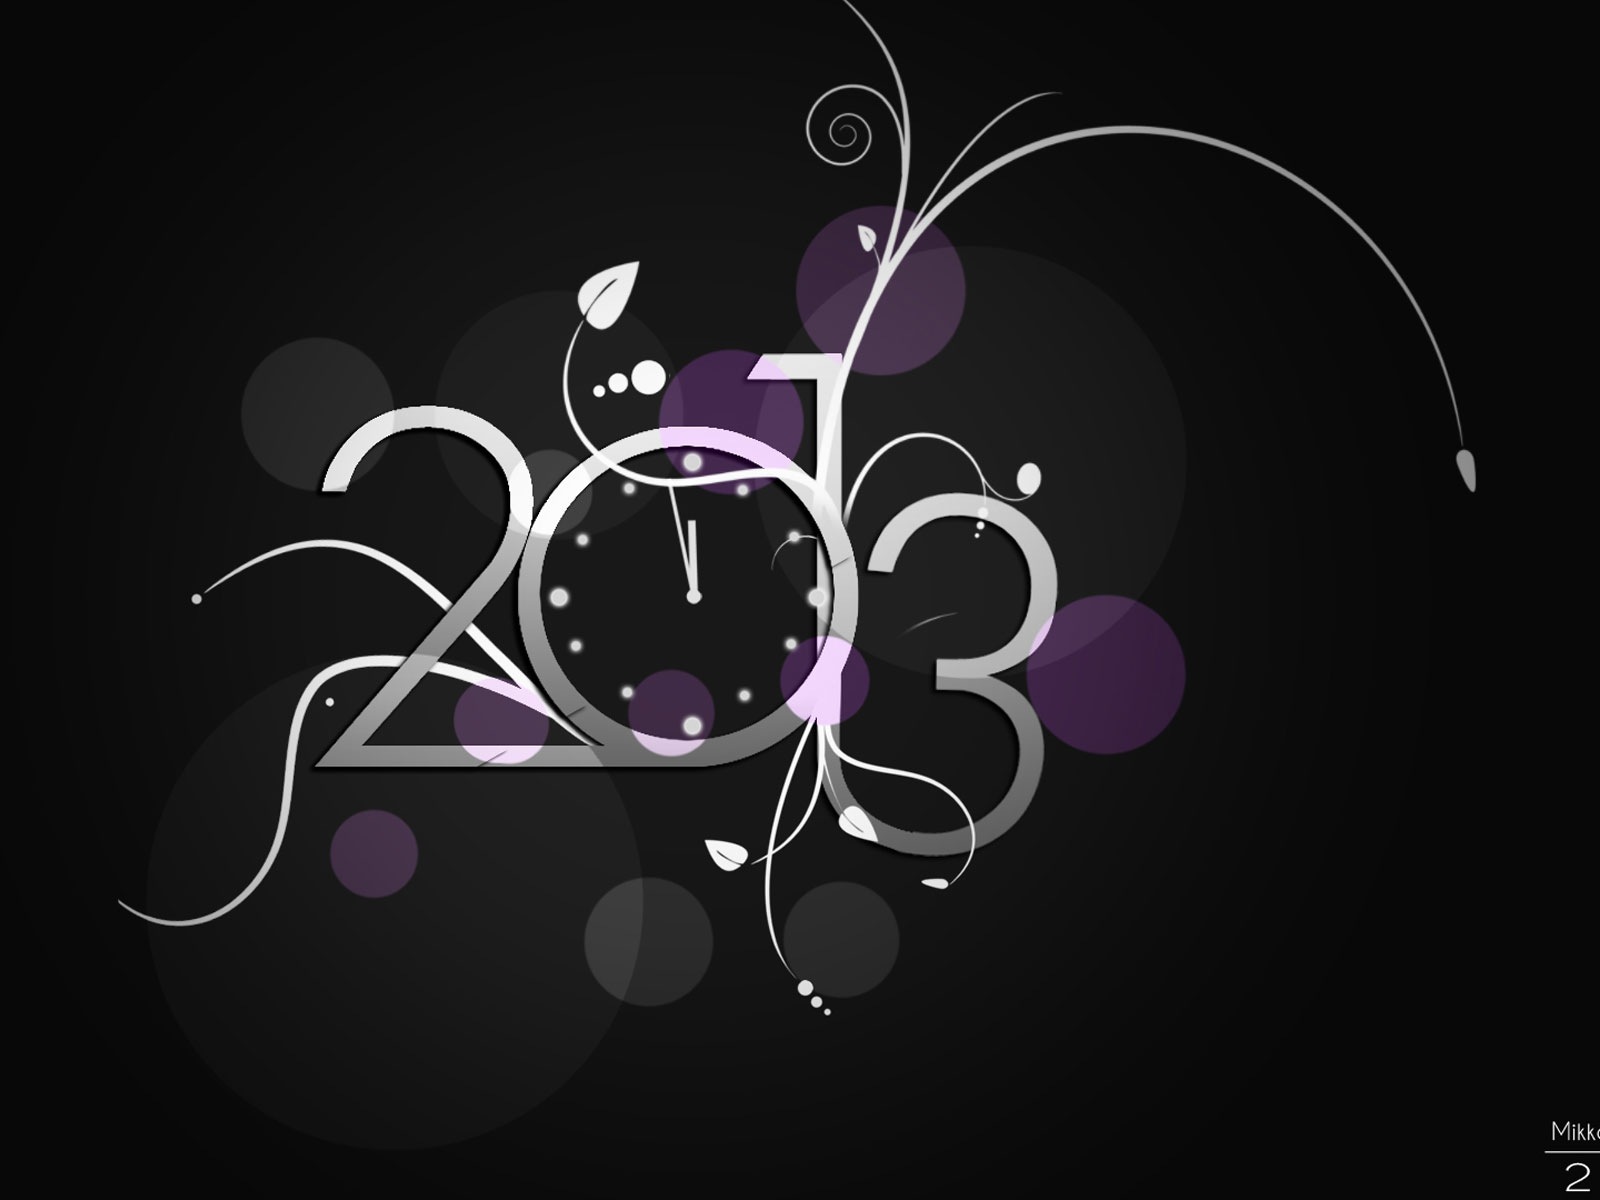 2013 New Year theme creative wallpaper(2) #12 - 1600x1200